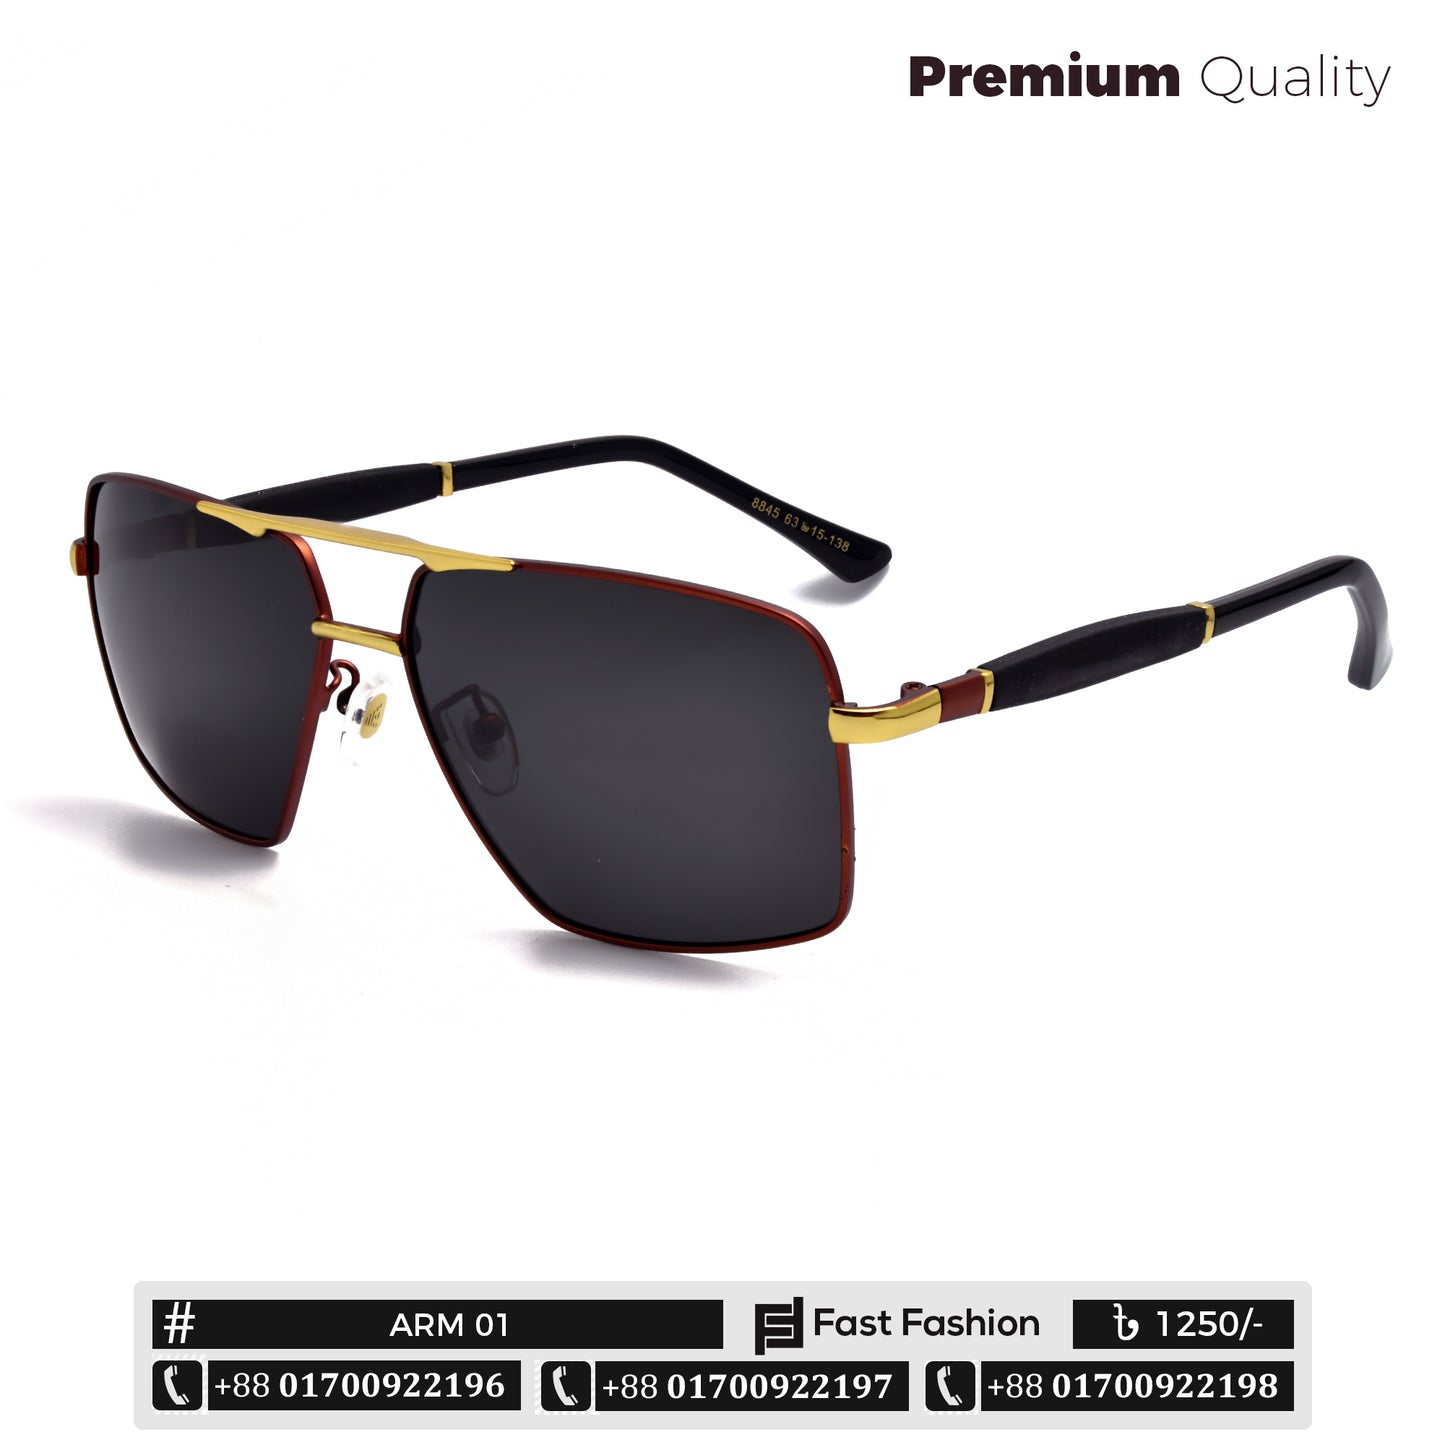 Premium Quality Trendy Stylish Sunglass | ARM 01